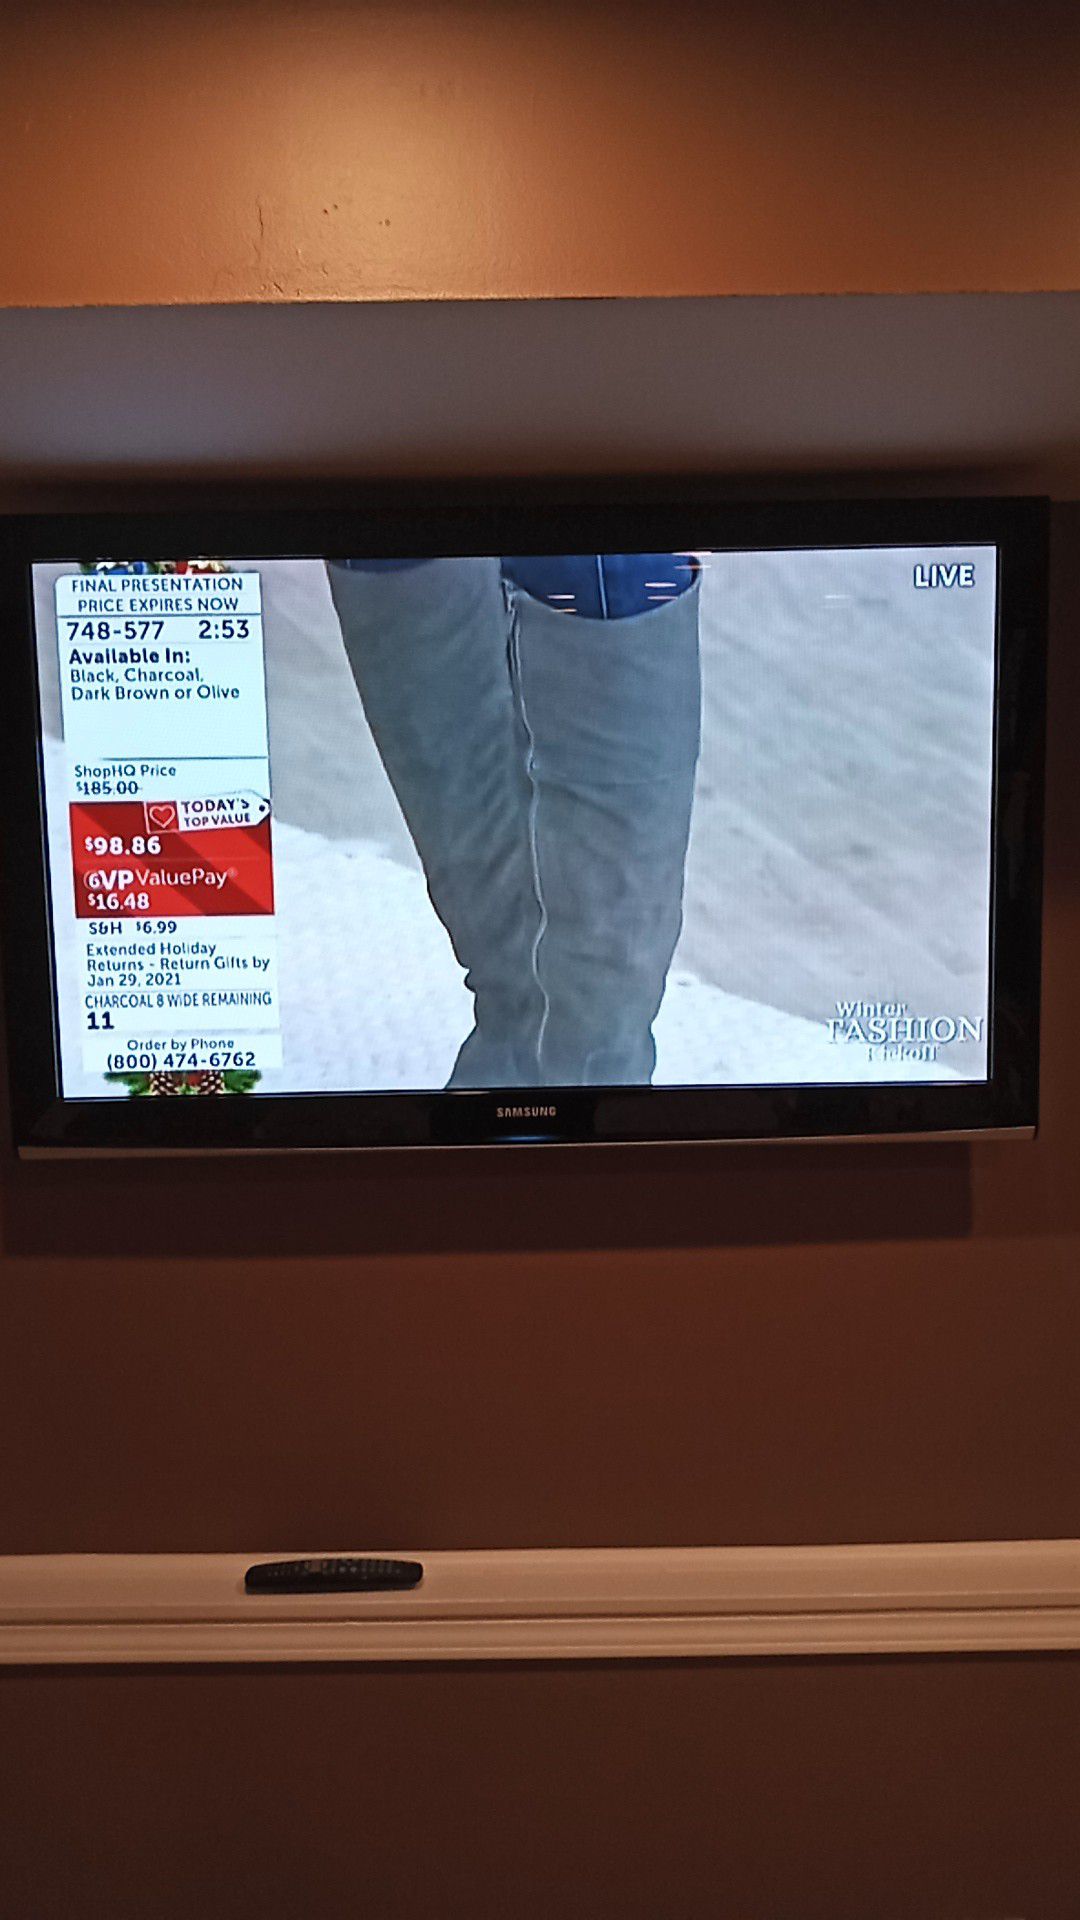 55-in Samsung TV